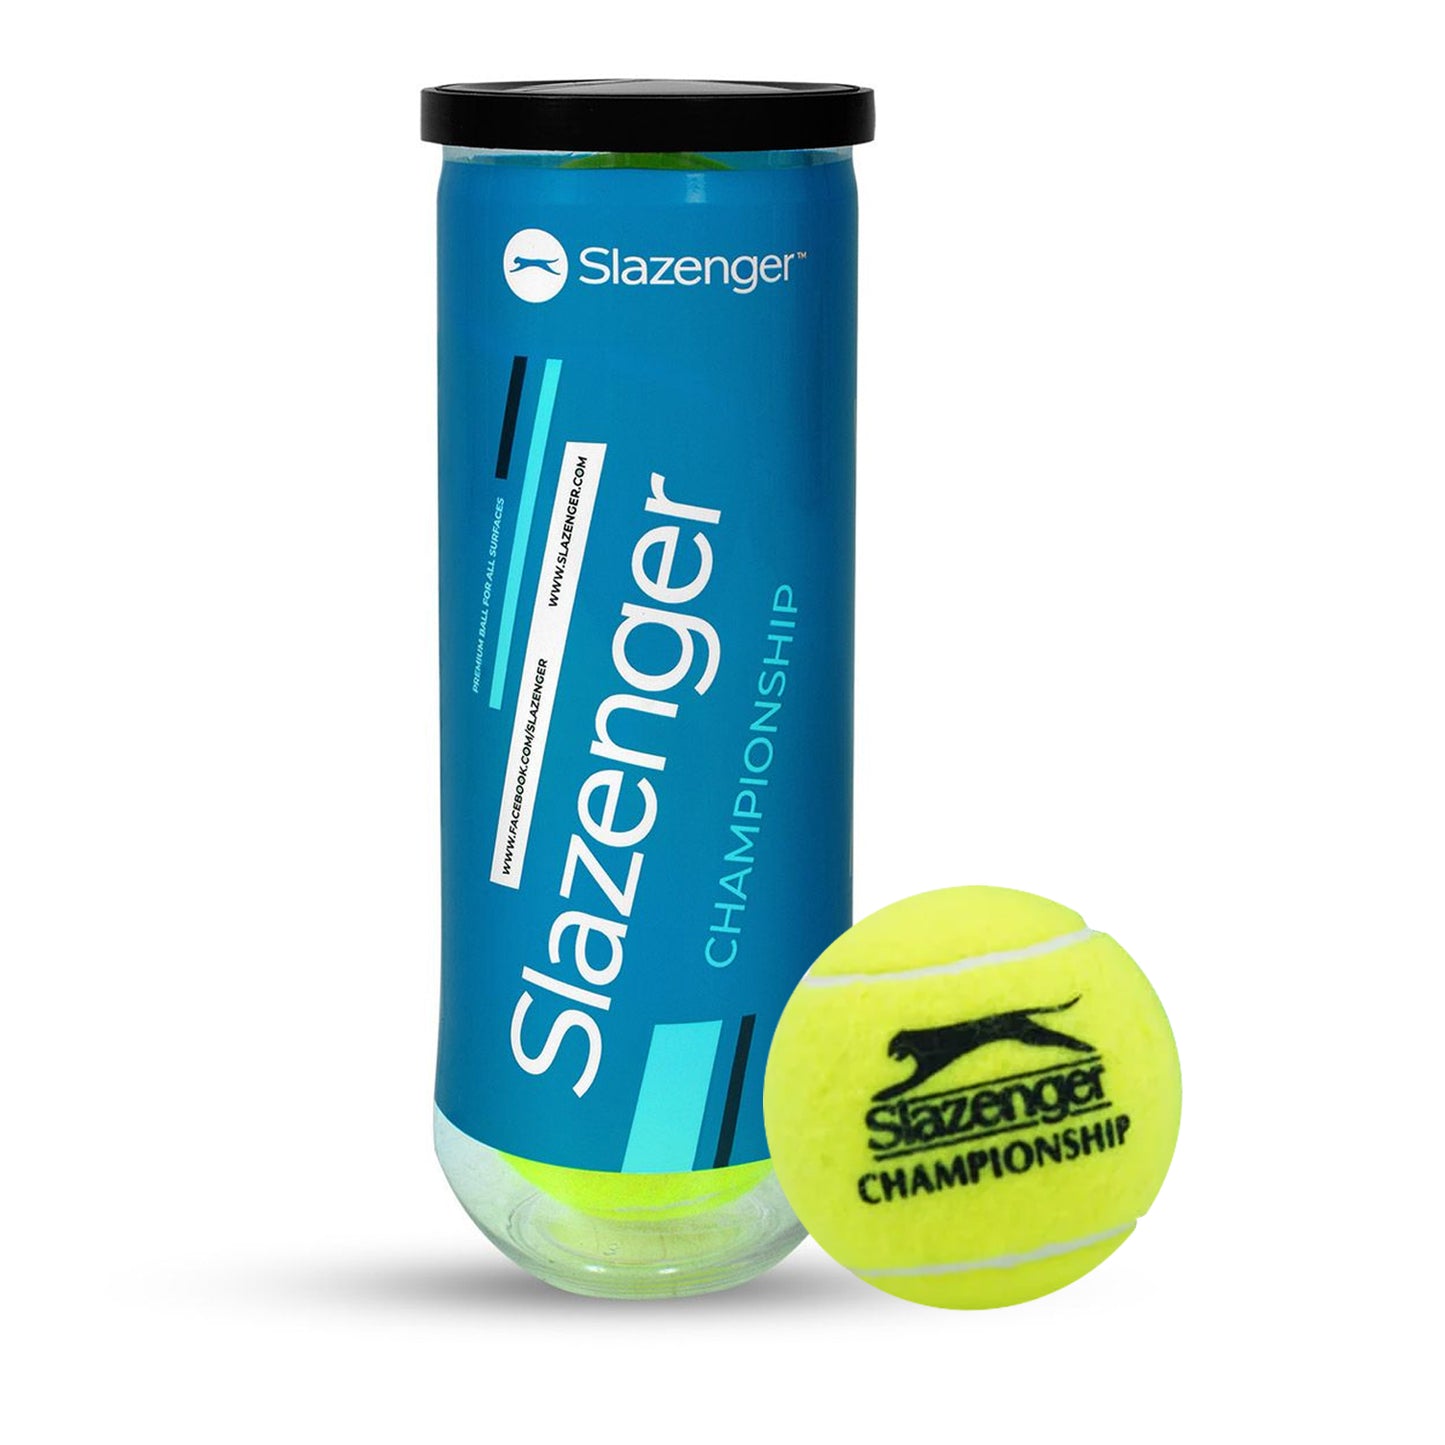 Slazenger Championship All Surface Tennis Balls Can (1 Can) - Best Price online Prokicksports.com